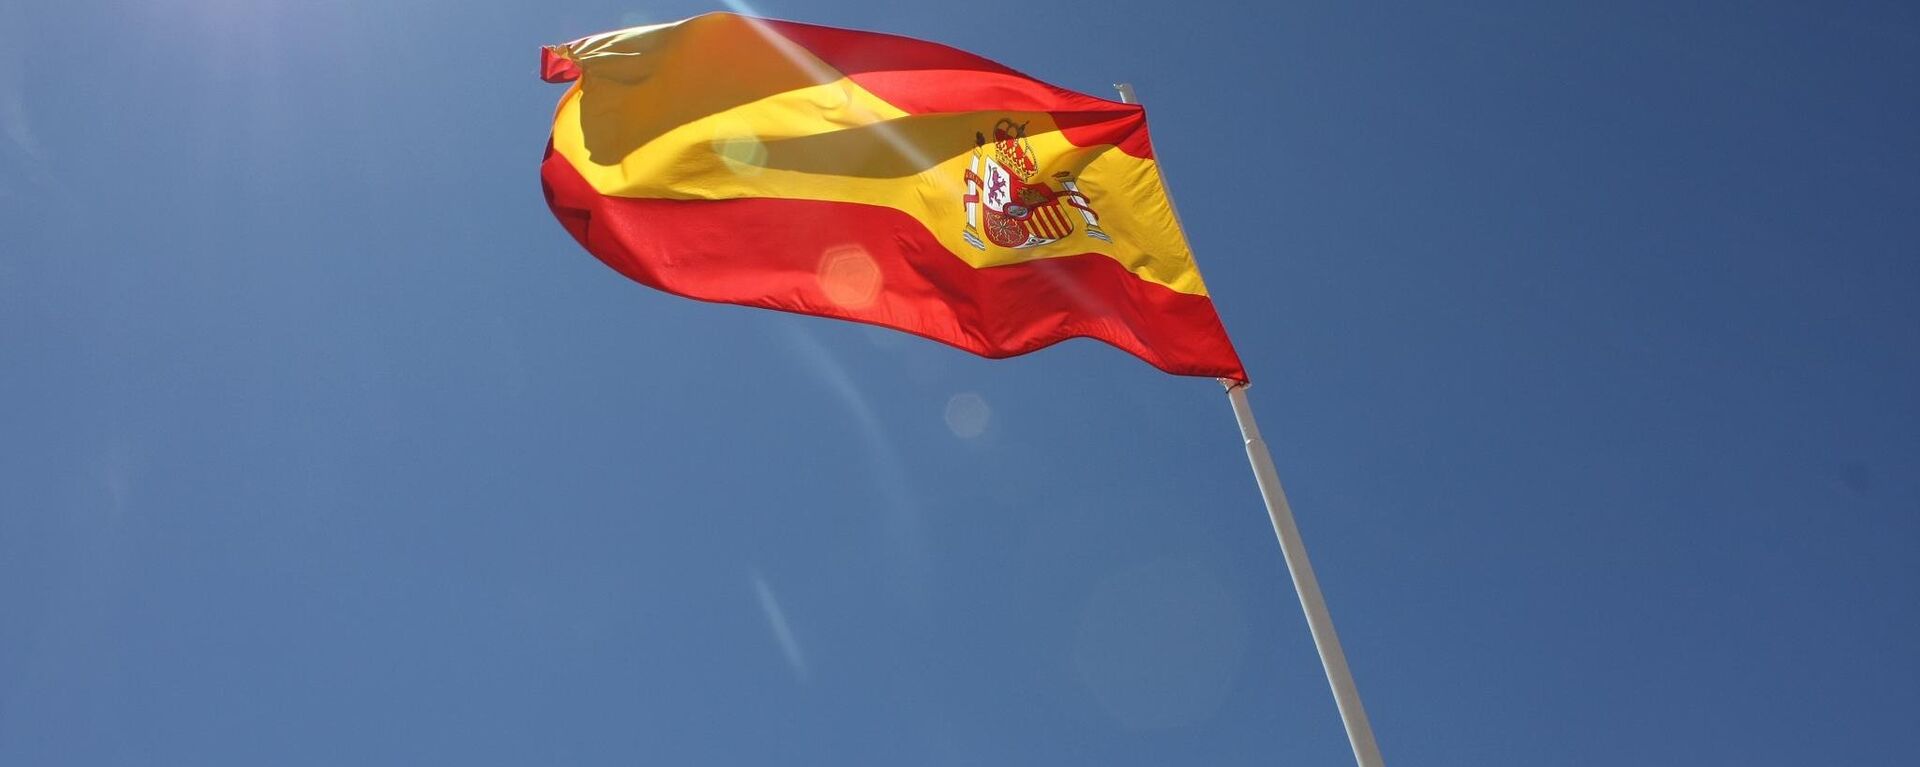 Bandera de España - Sputnik Mundo, 1920, 13.07.2021